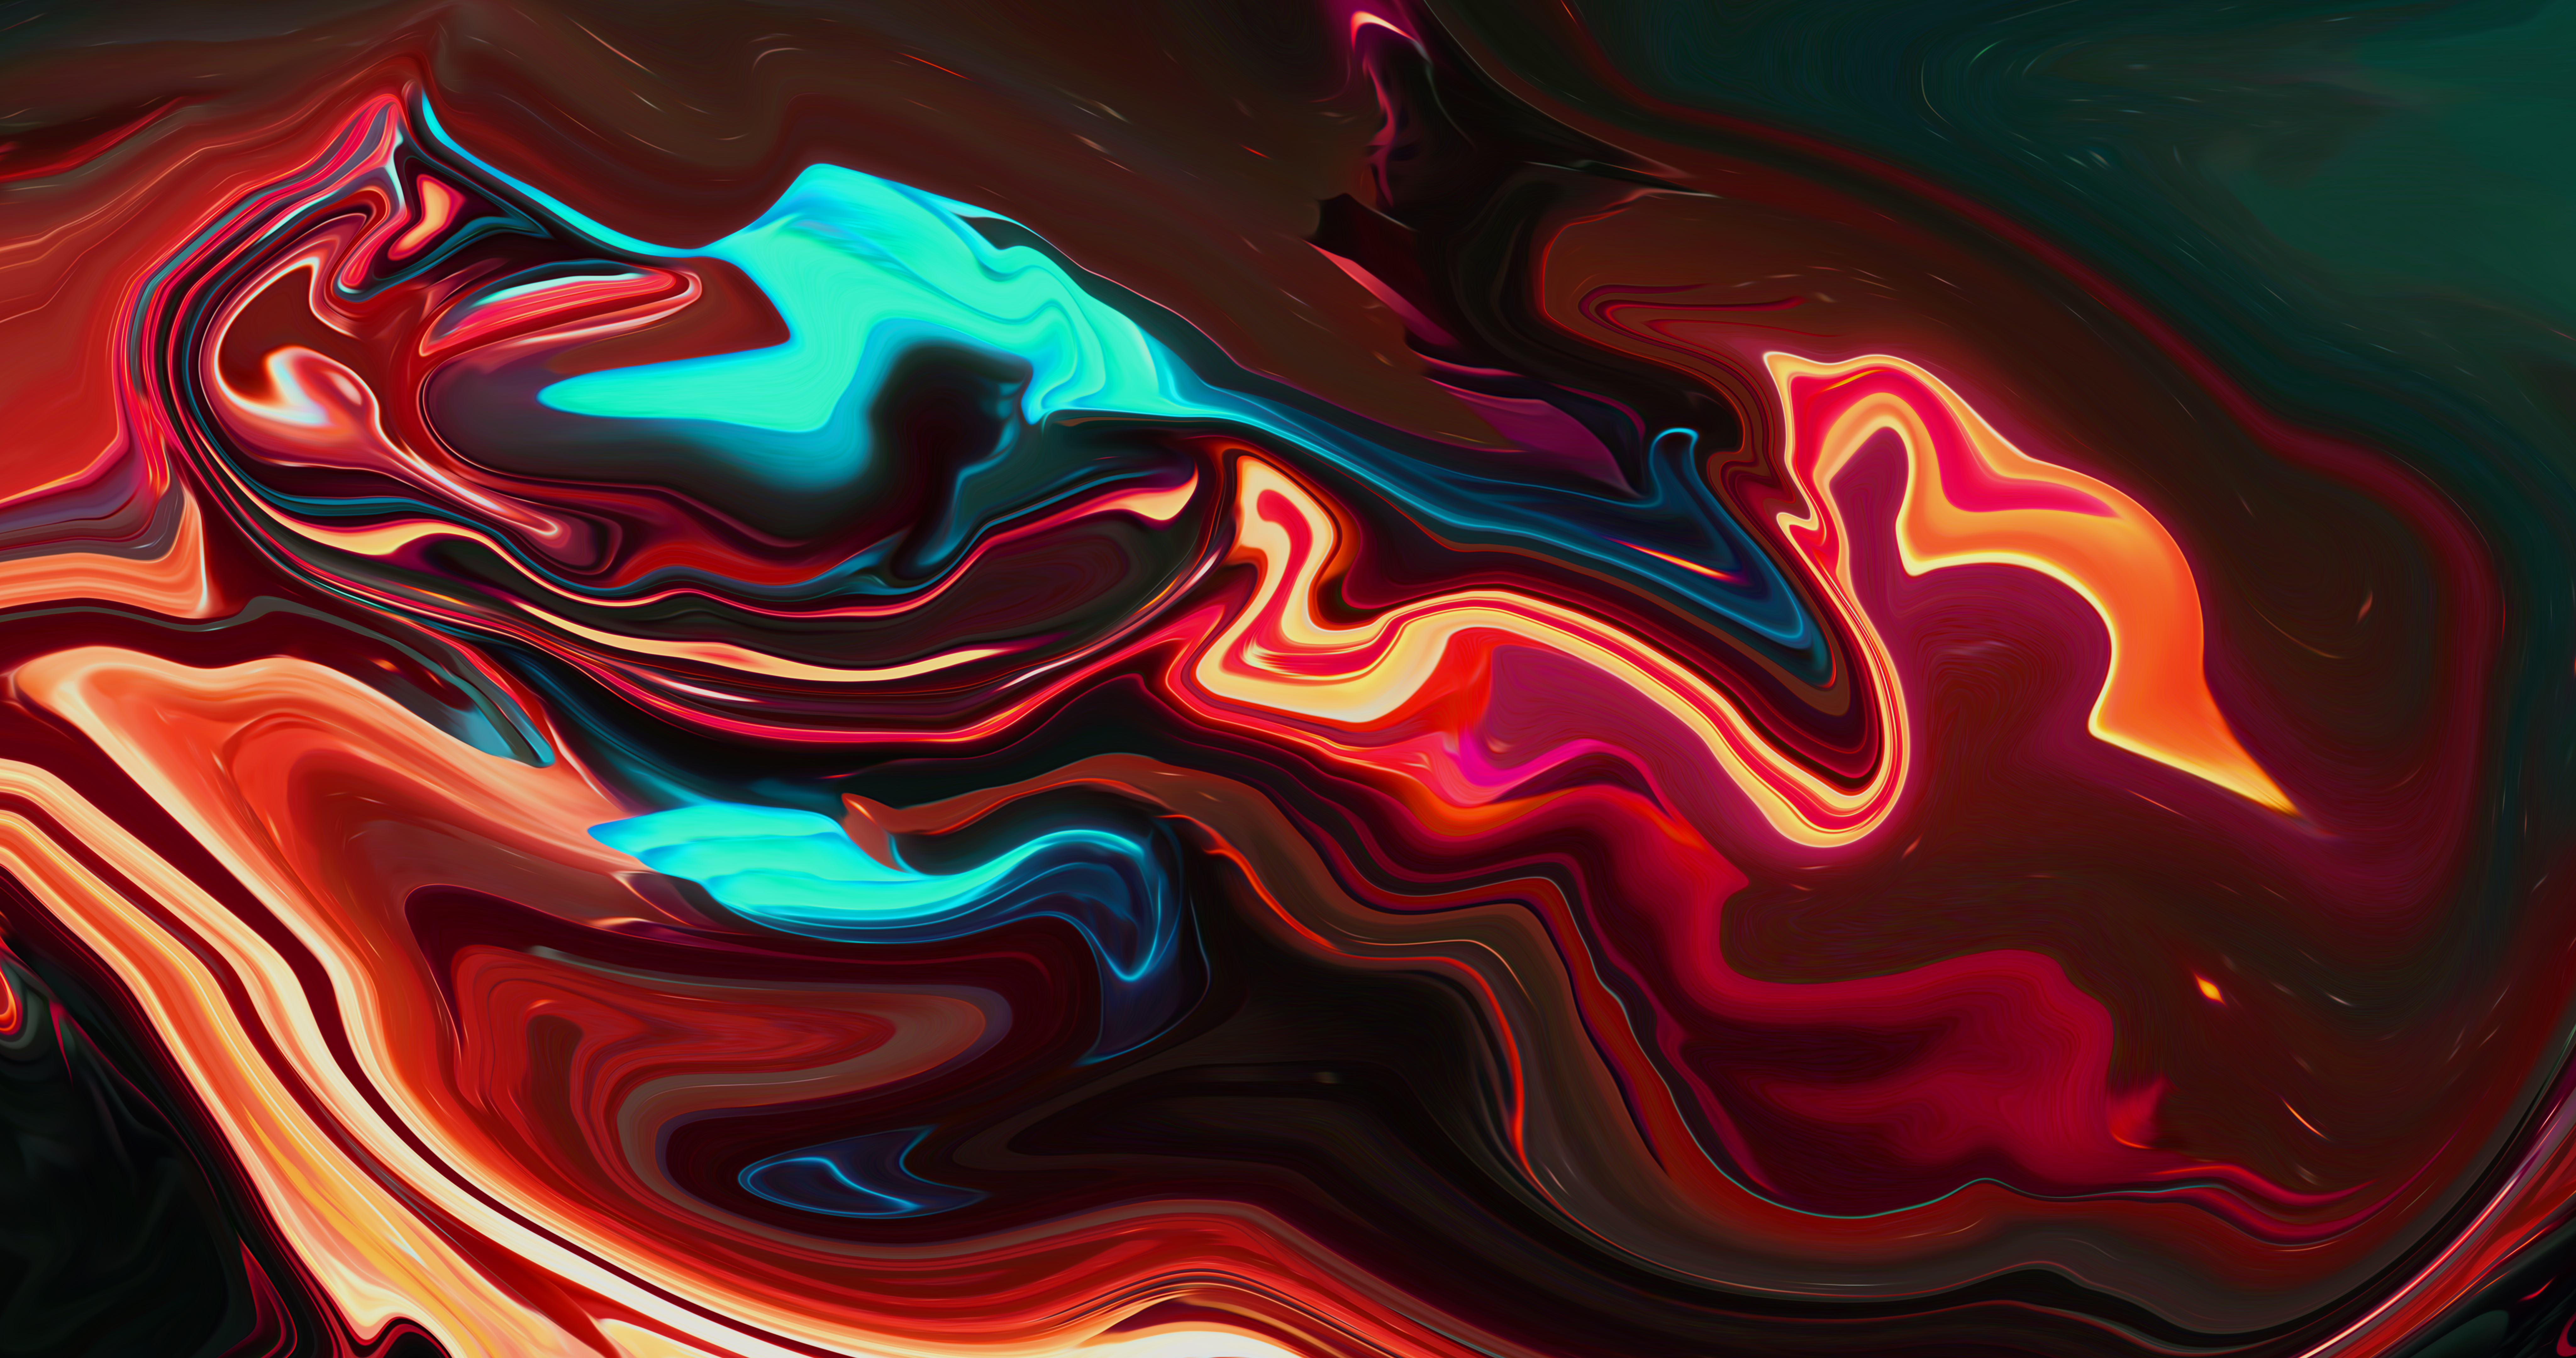 Abstract Shapes Fluid Liquid Artwork Digital Art Paint Brushes Neon 8 K Red Volcano 8192x4320